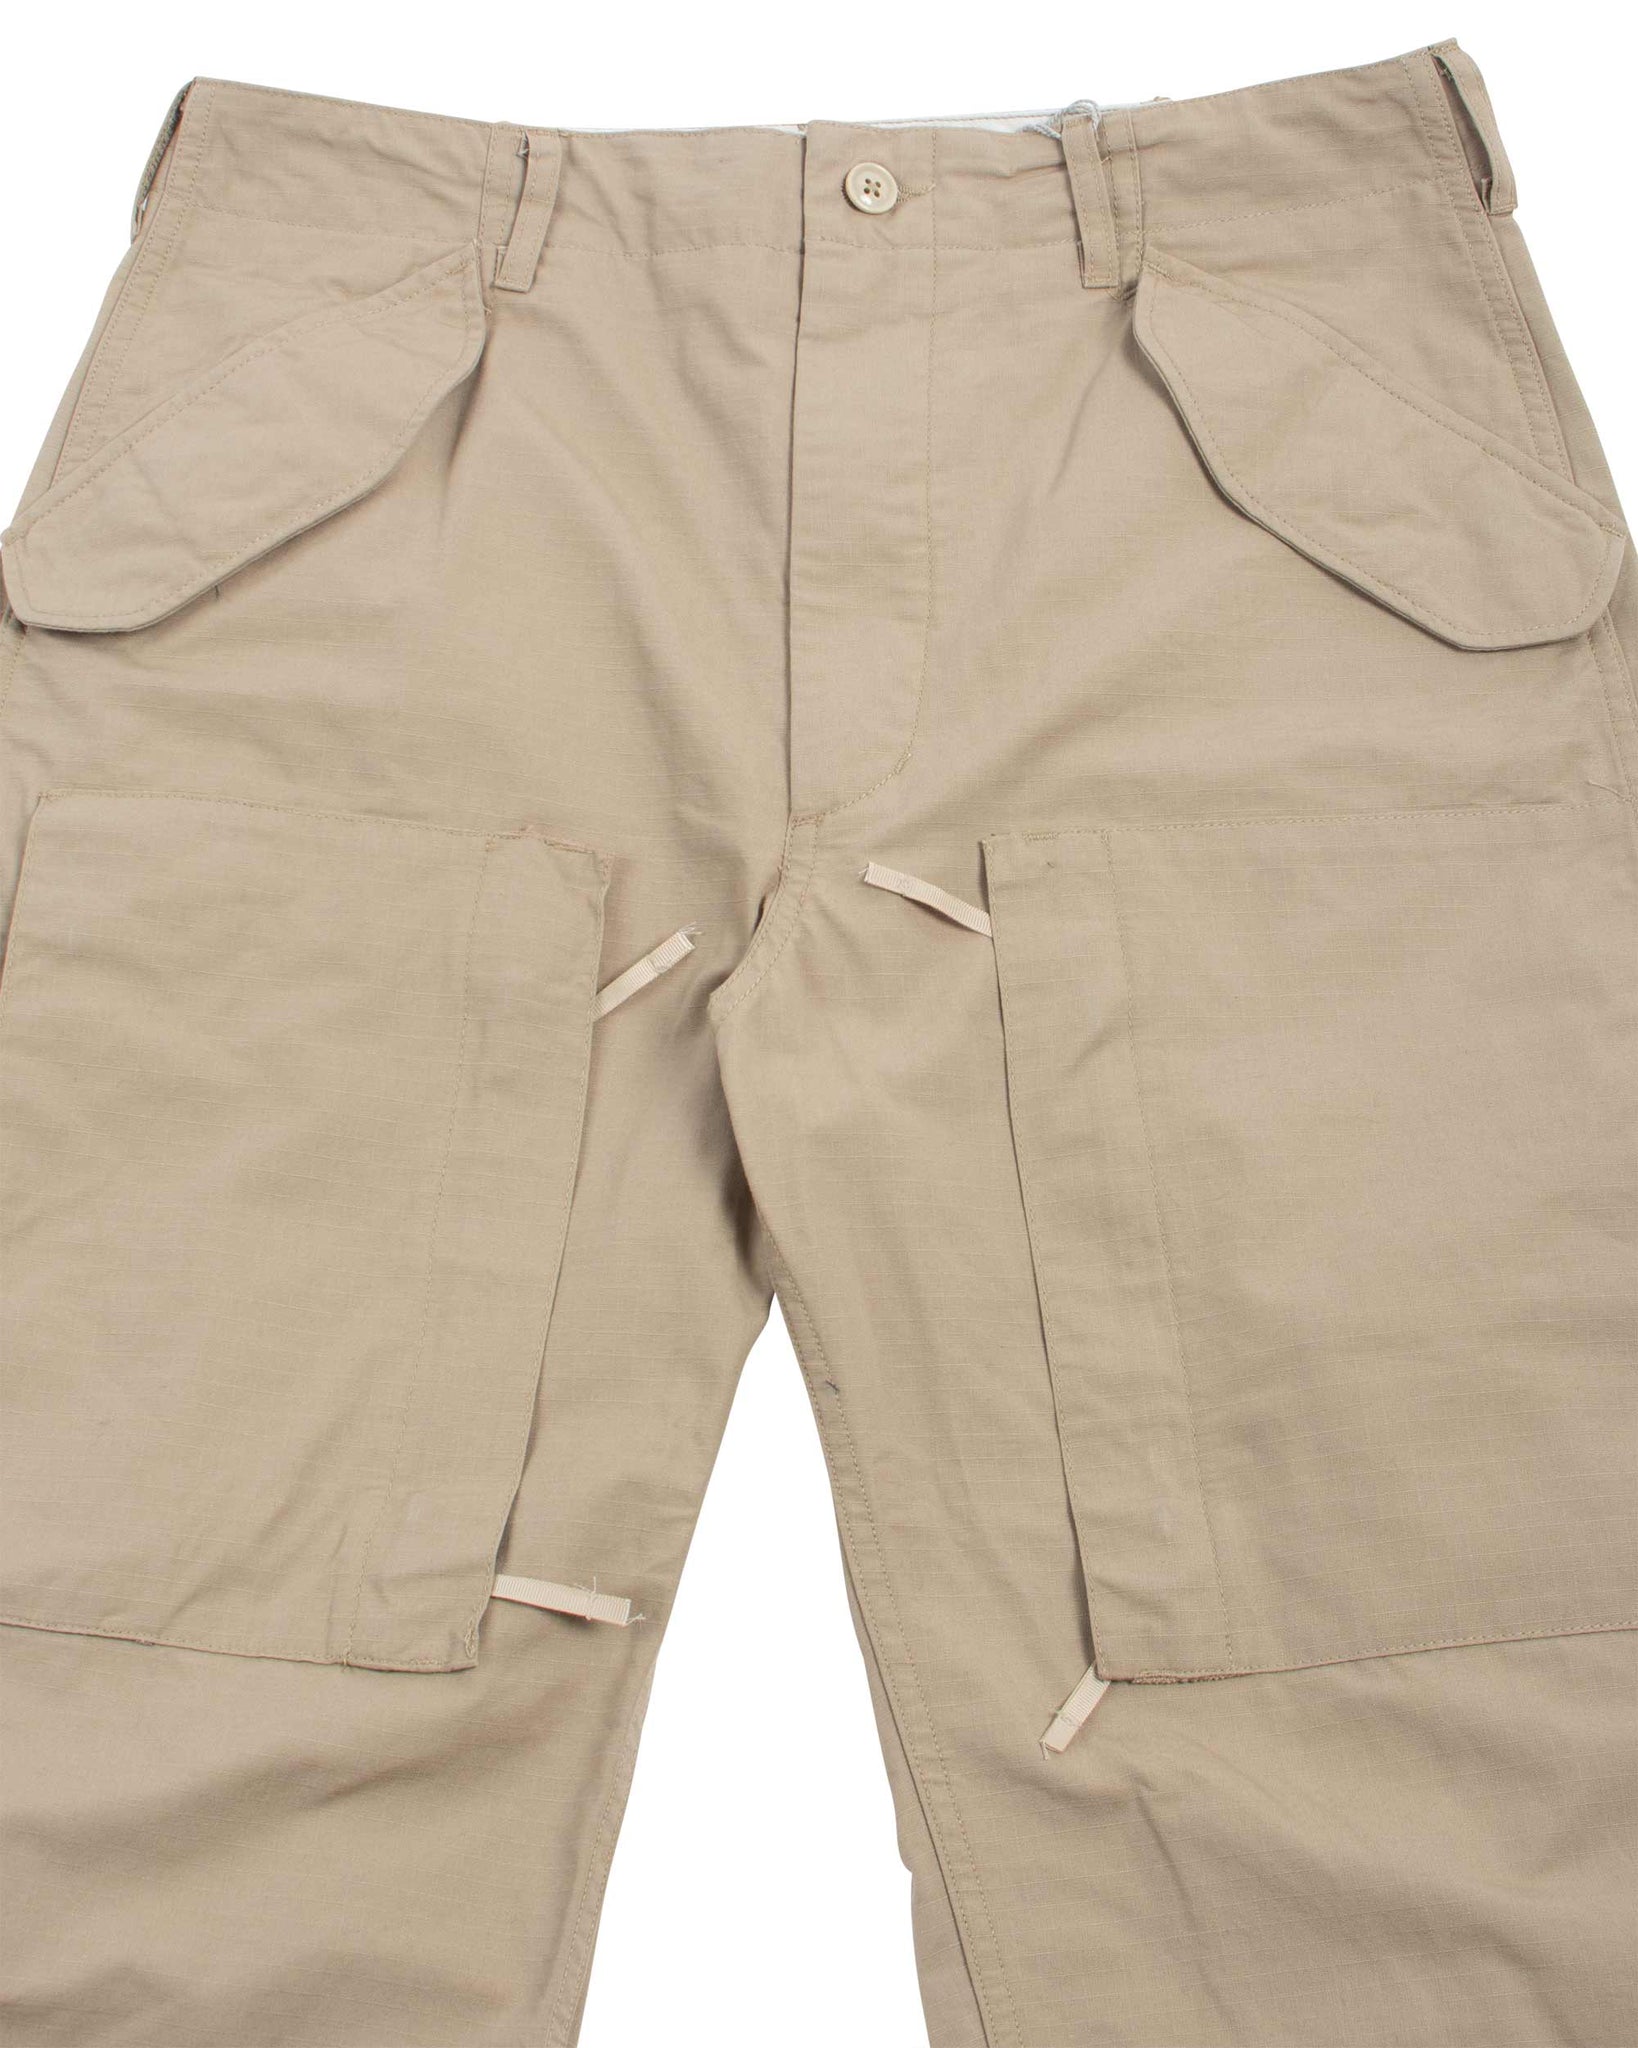 Engineered Garments Aircrew Pant Khaki Cotton Ripstop